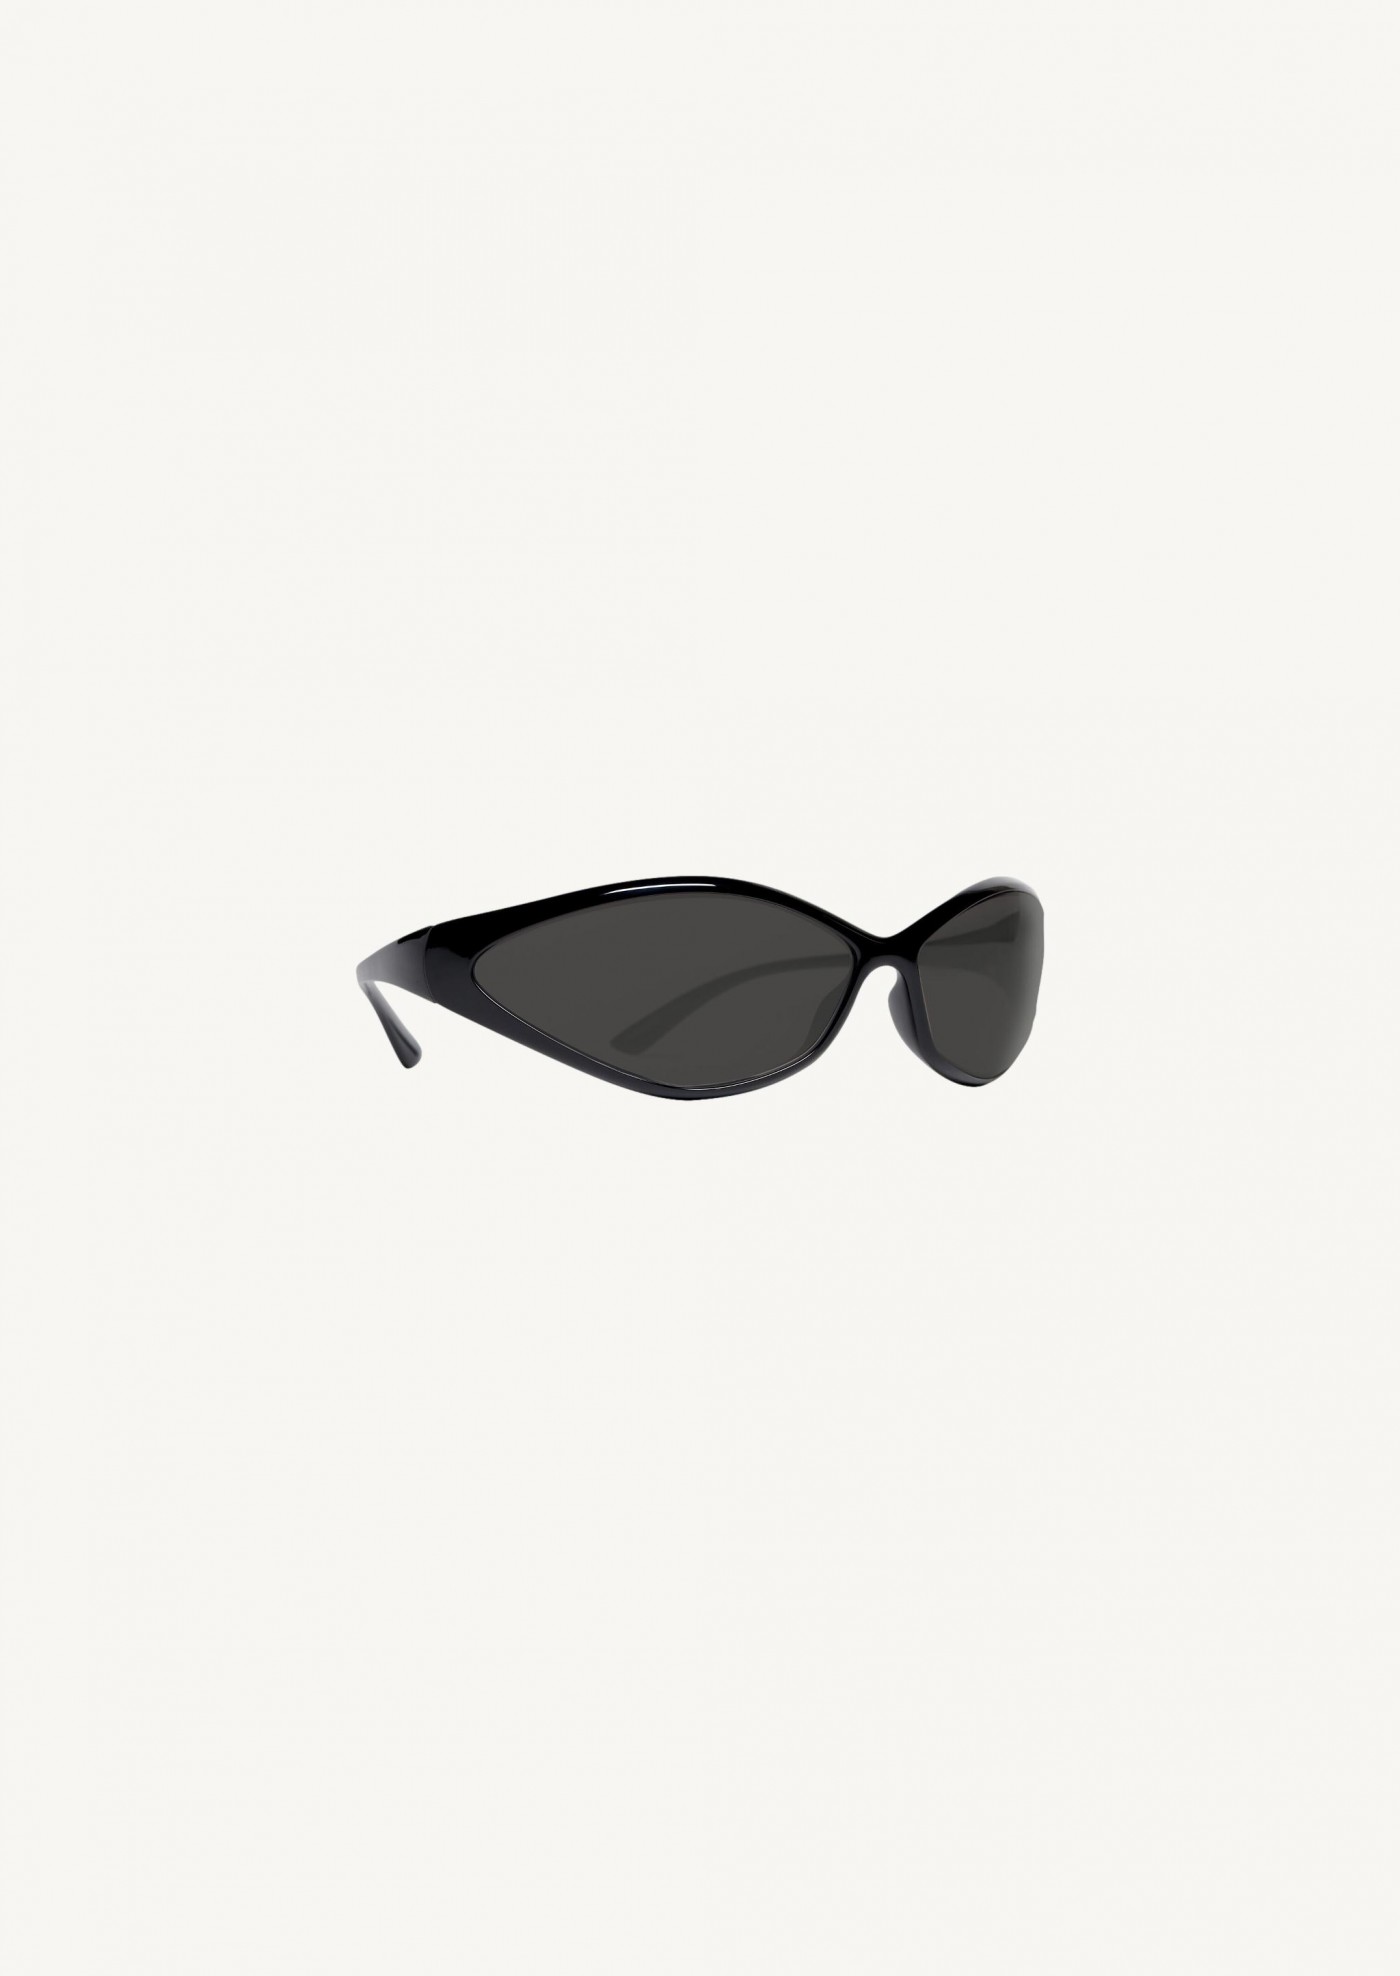 90s oval sunglass in black